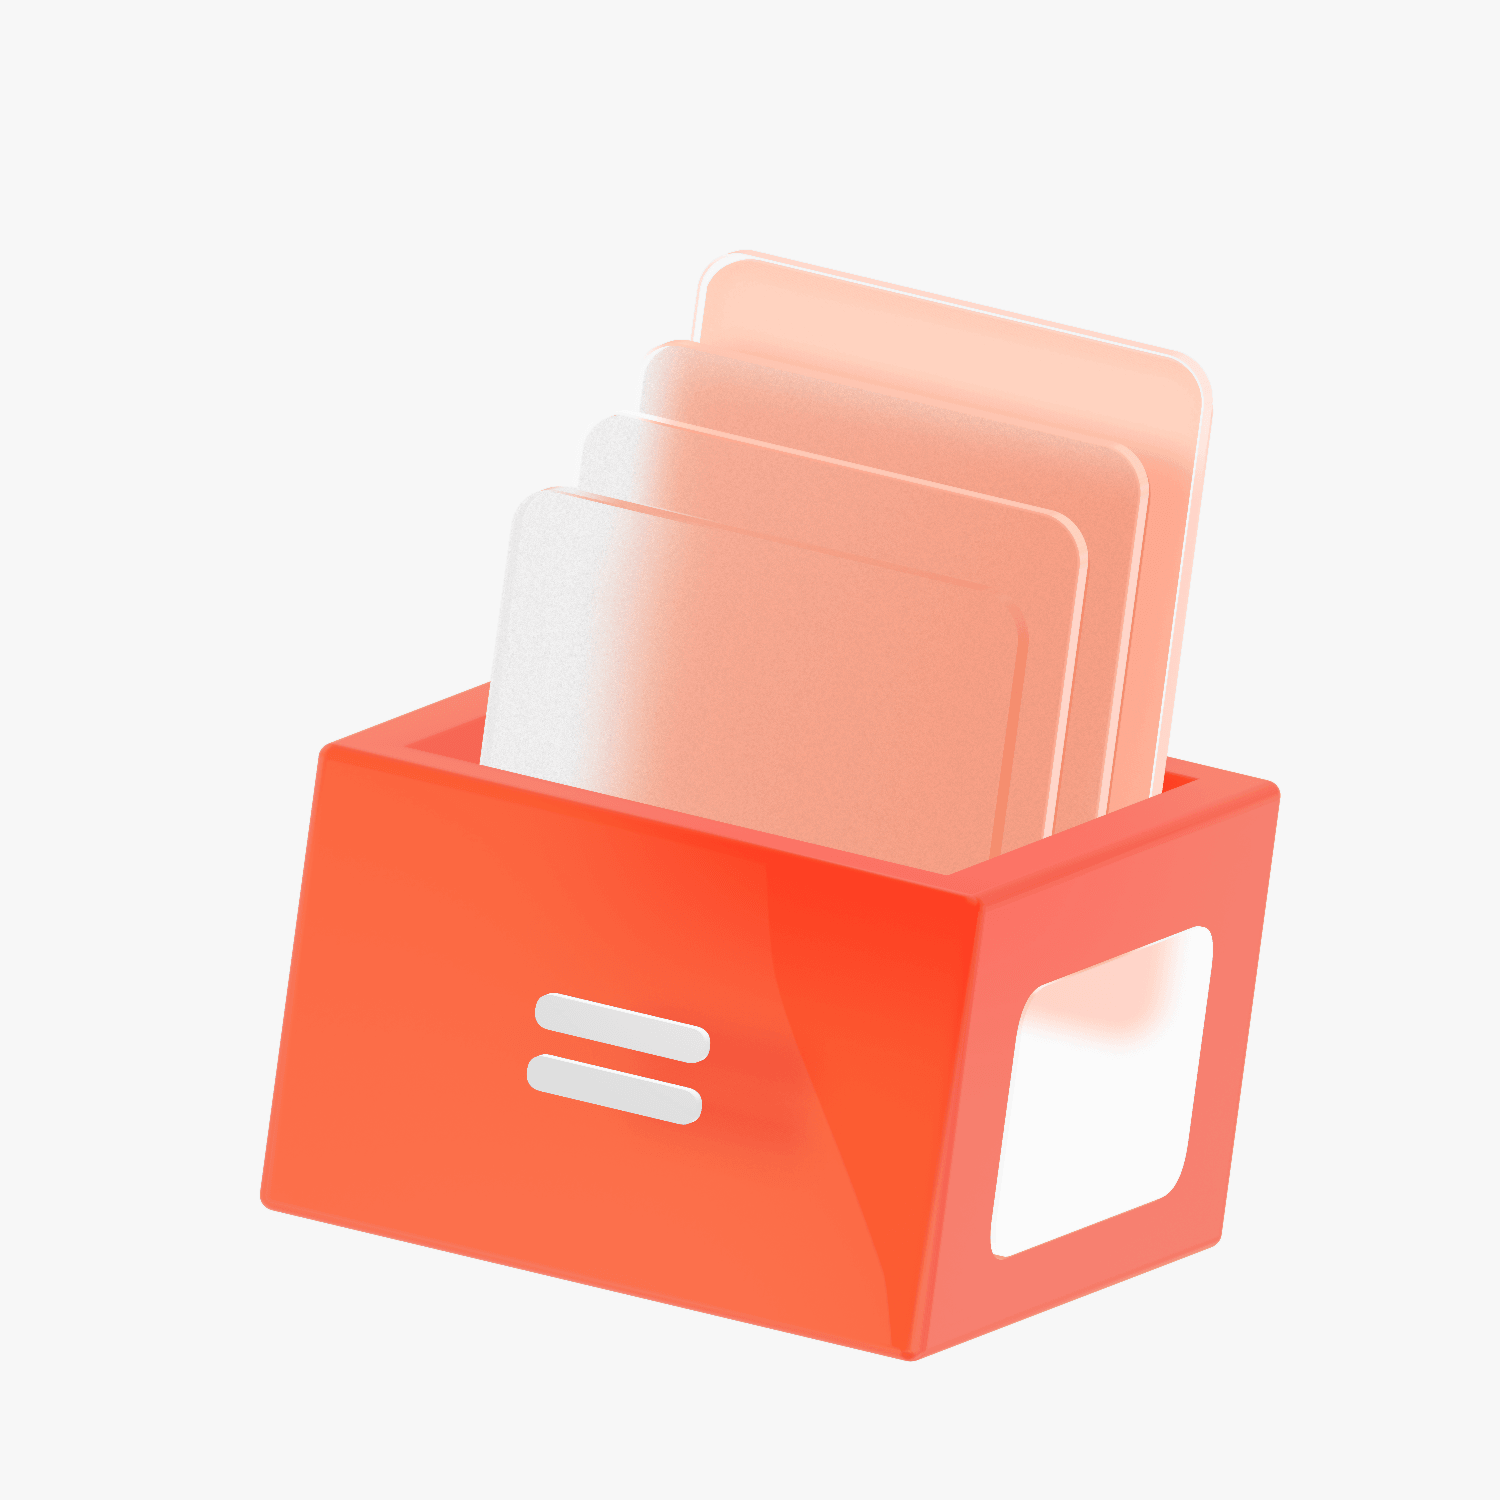 Transparent document in an orange box